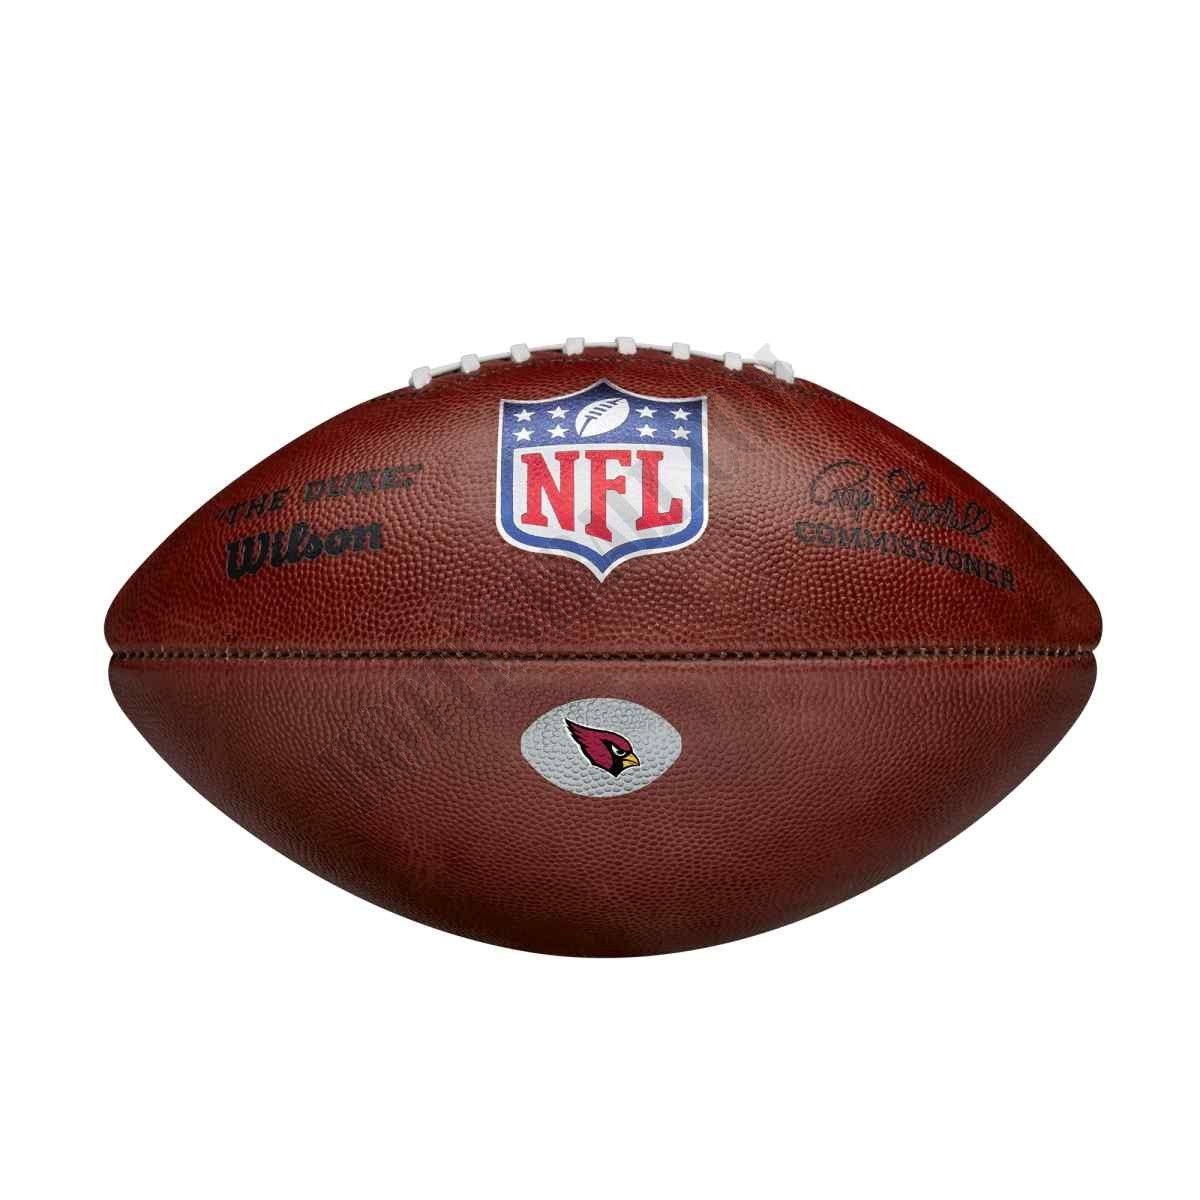 The Duke Decal NFL Football - Arizona Cardinals ● Wilson Promotions - The Duke Decal NFL Football - Arizona Cardinals ● Wilson Promotions